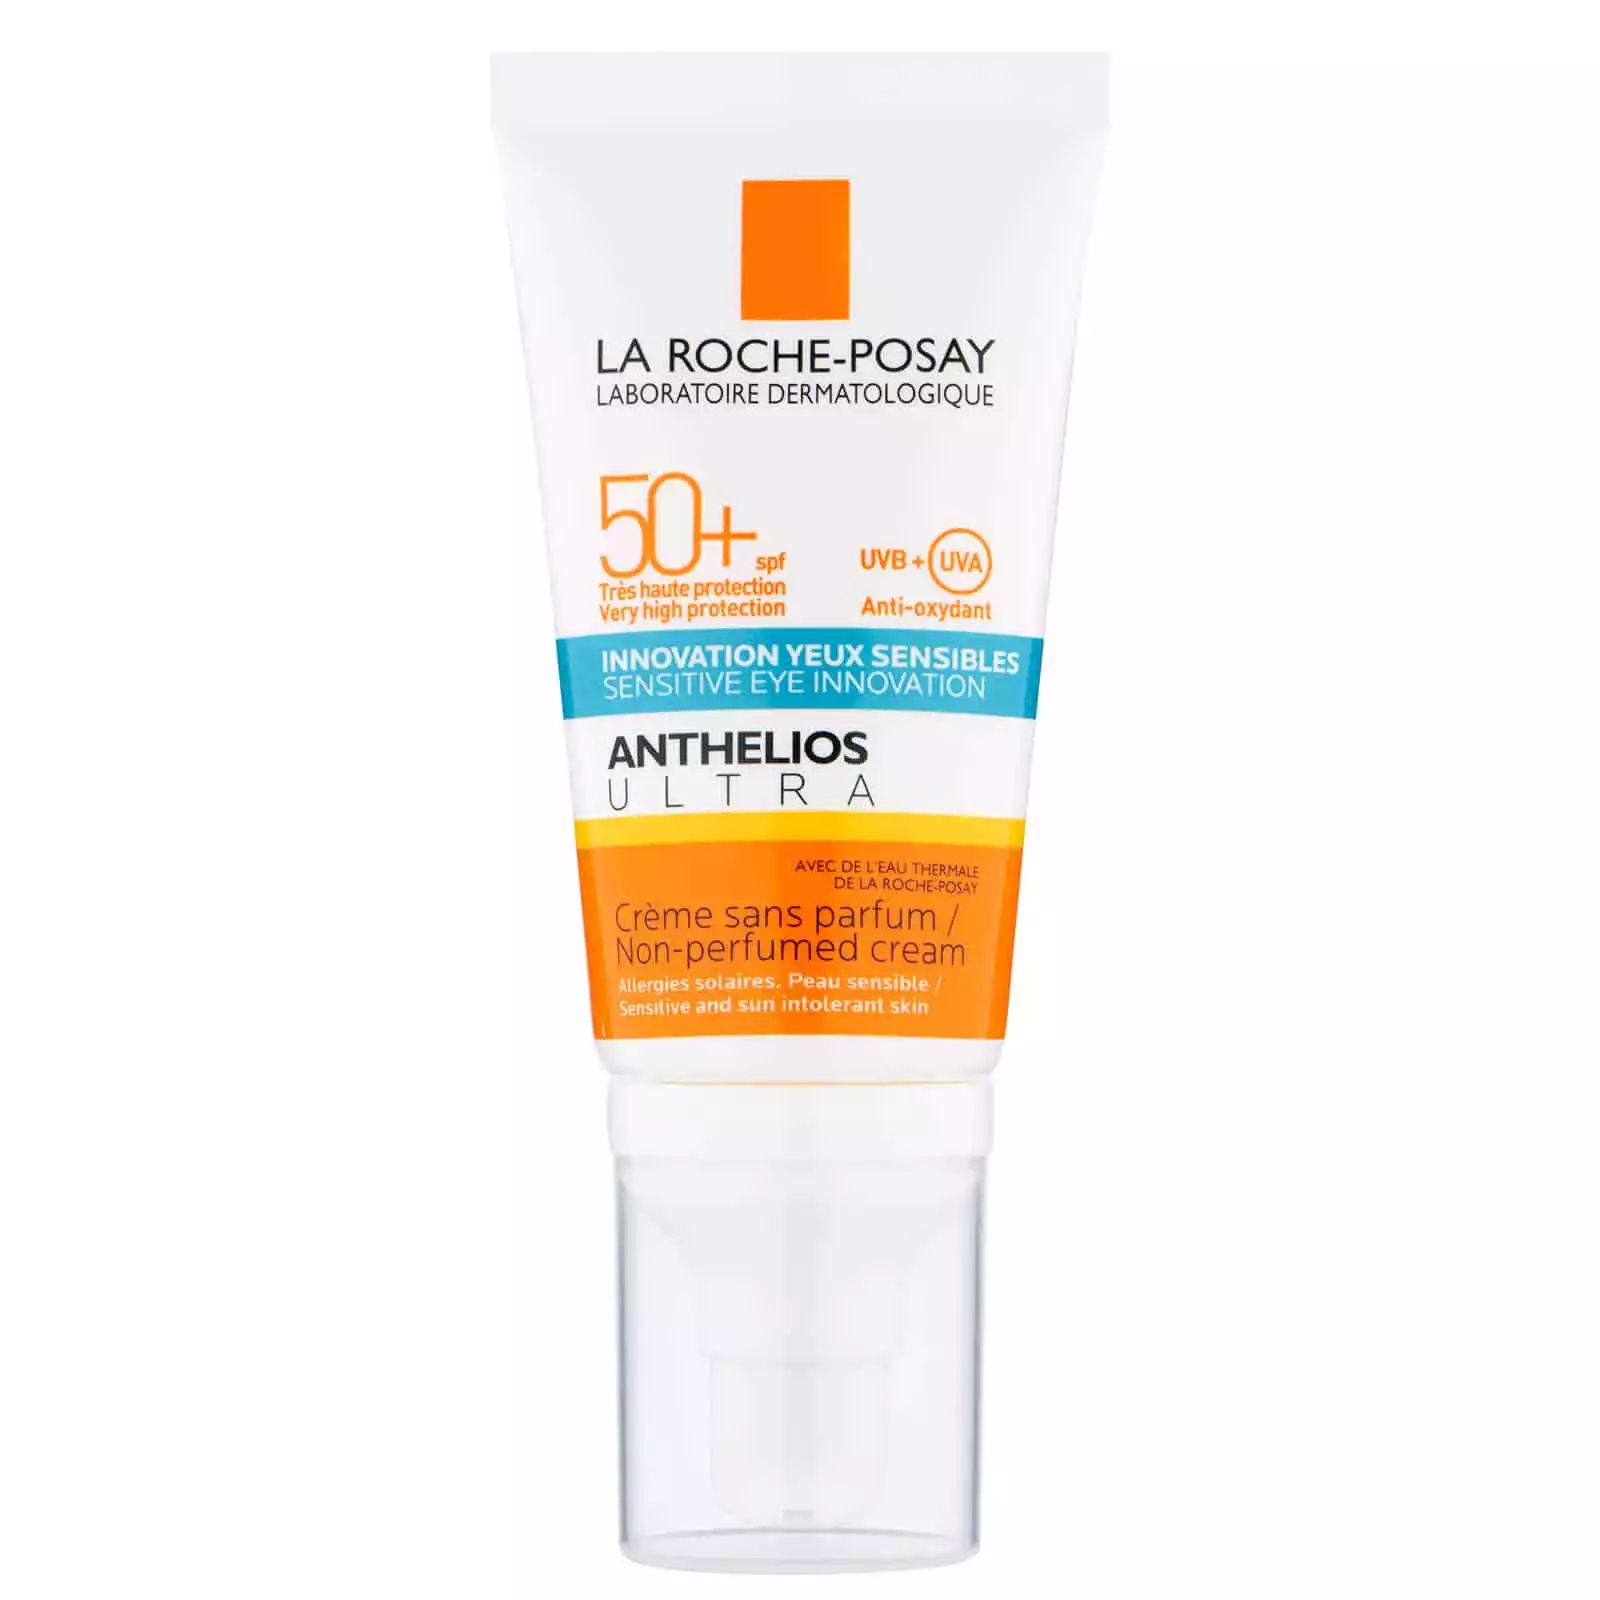 La Roche-Posay Anthelios ULTRA SPF50+ Facial Sunscreen